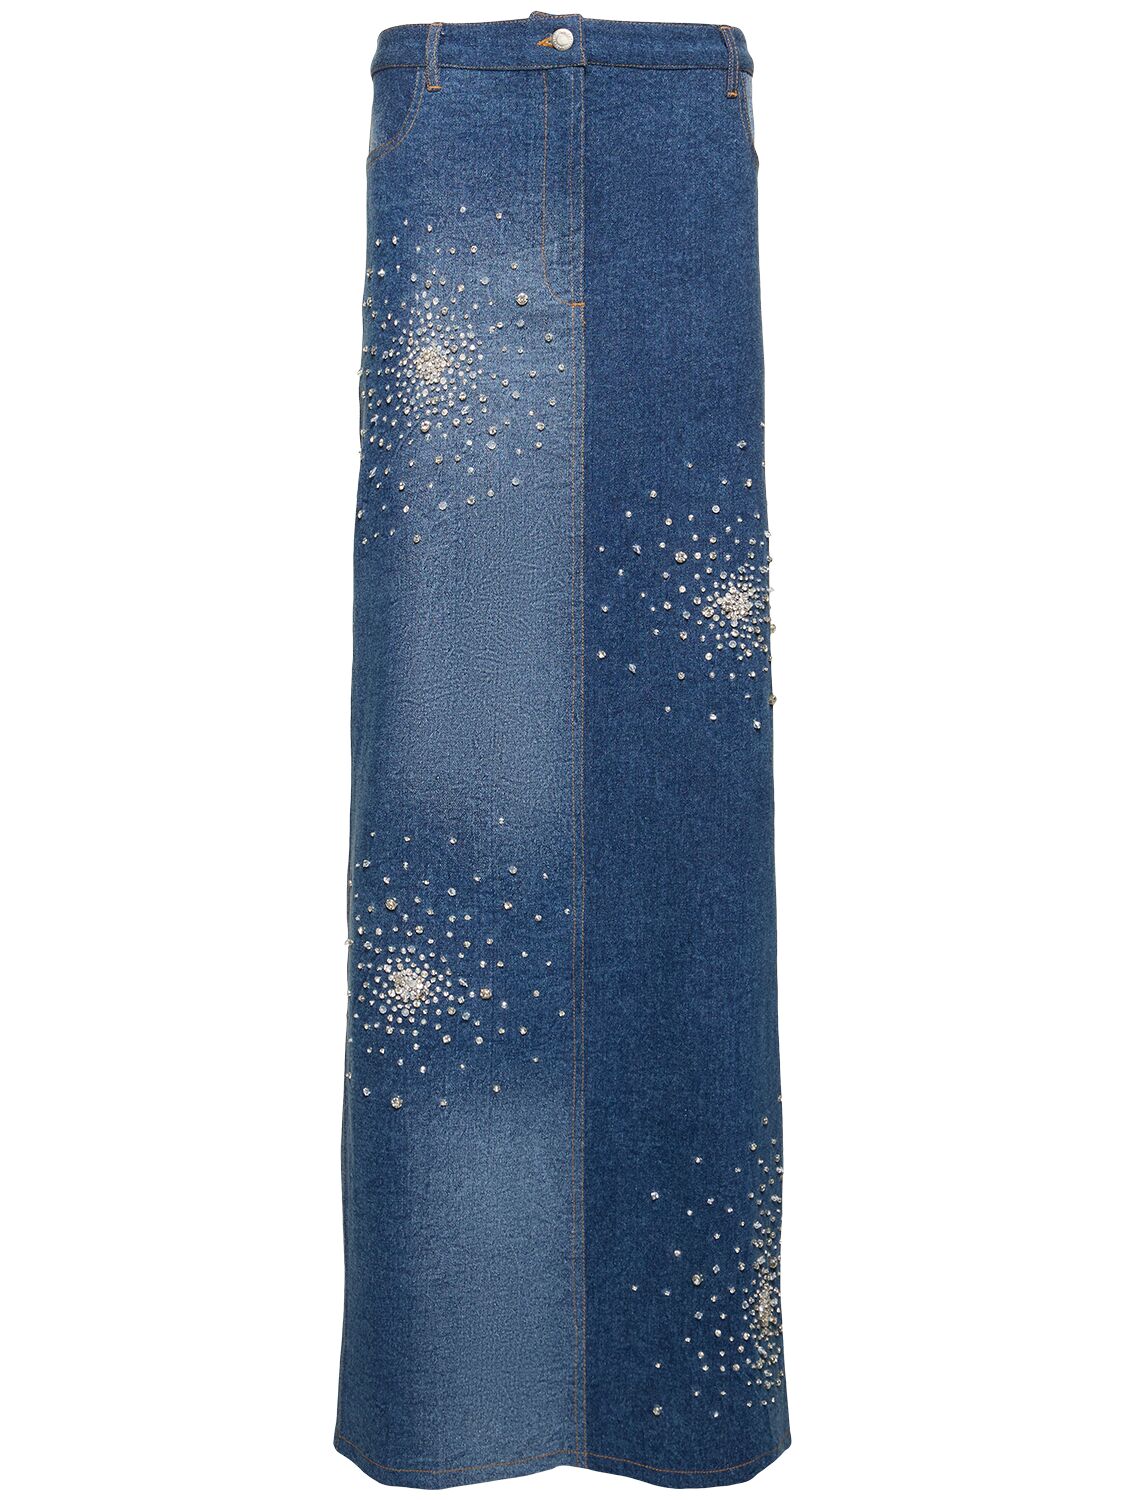 Image of Tie Dye Embellished Denim Midi Skirt